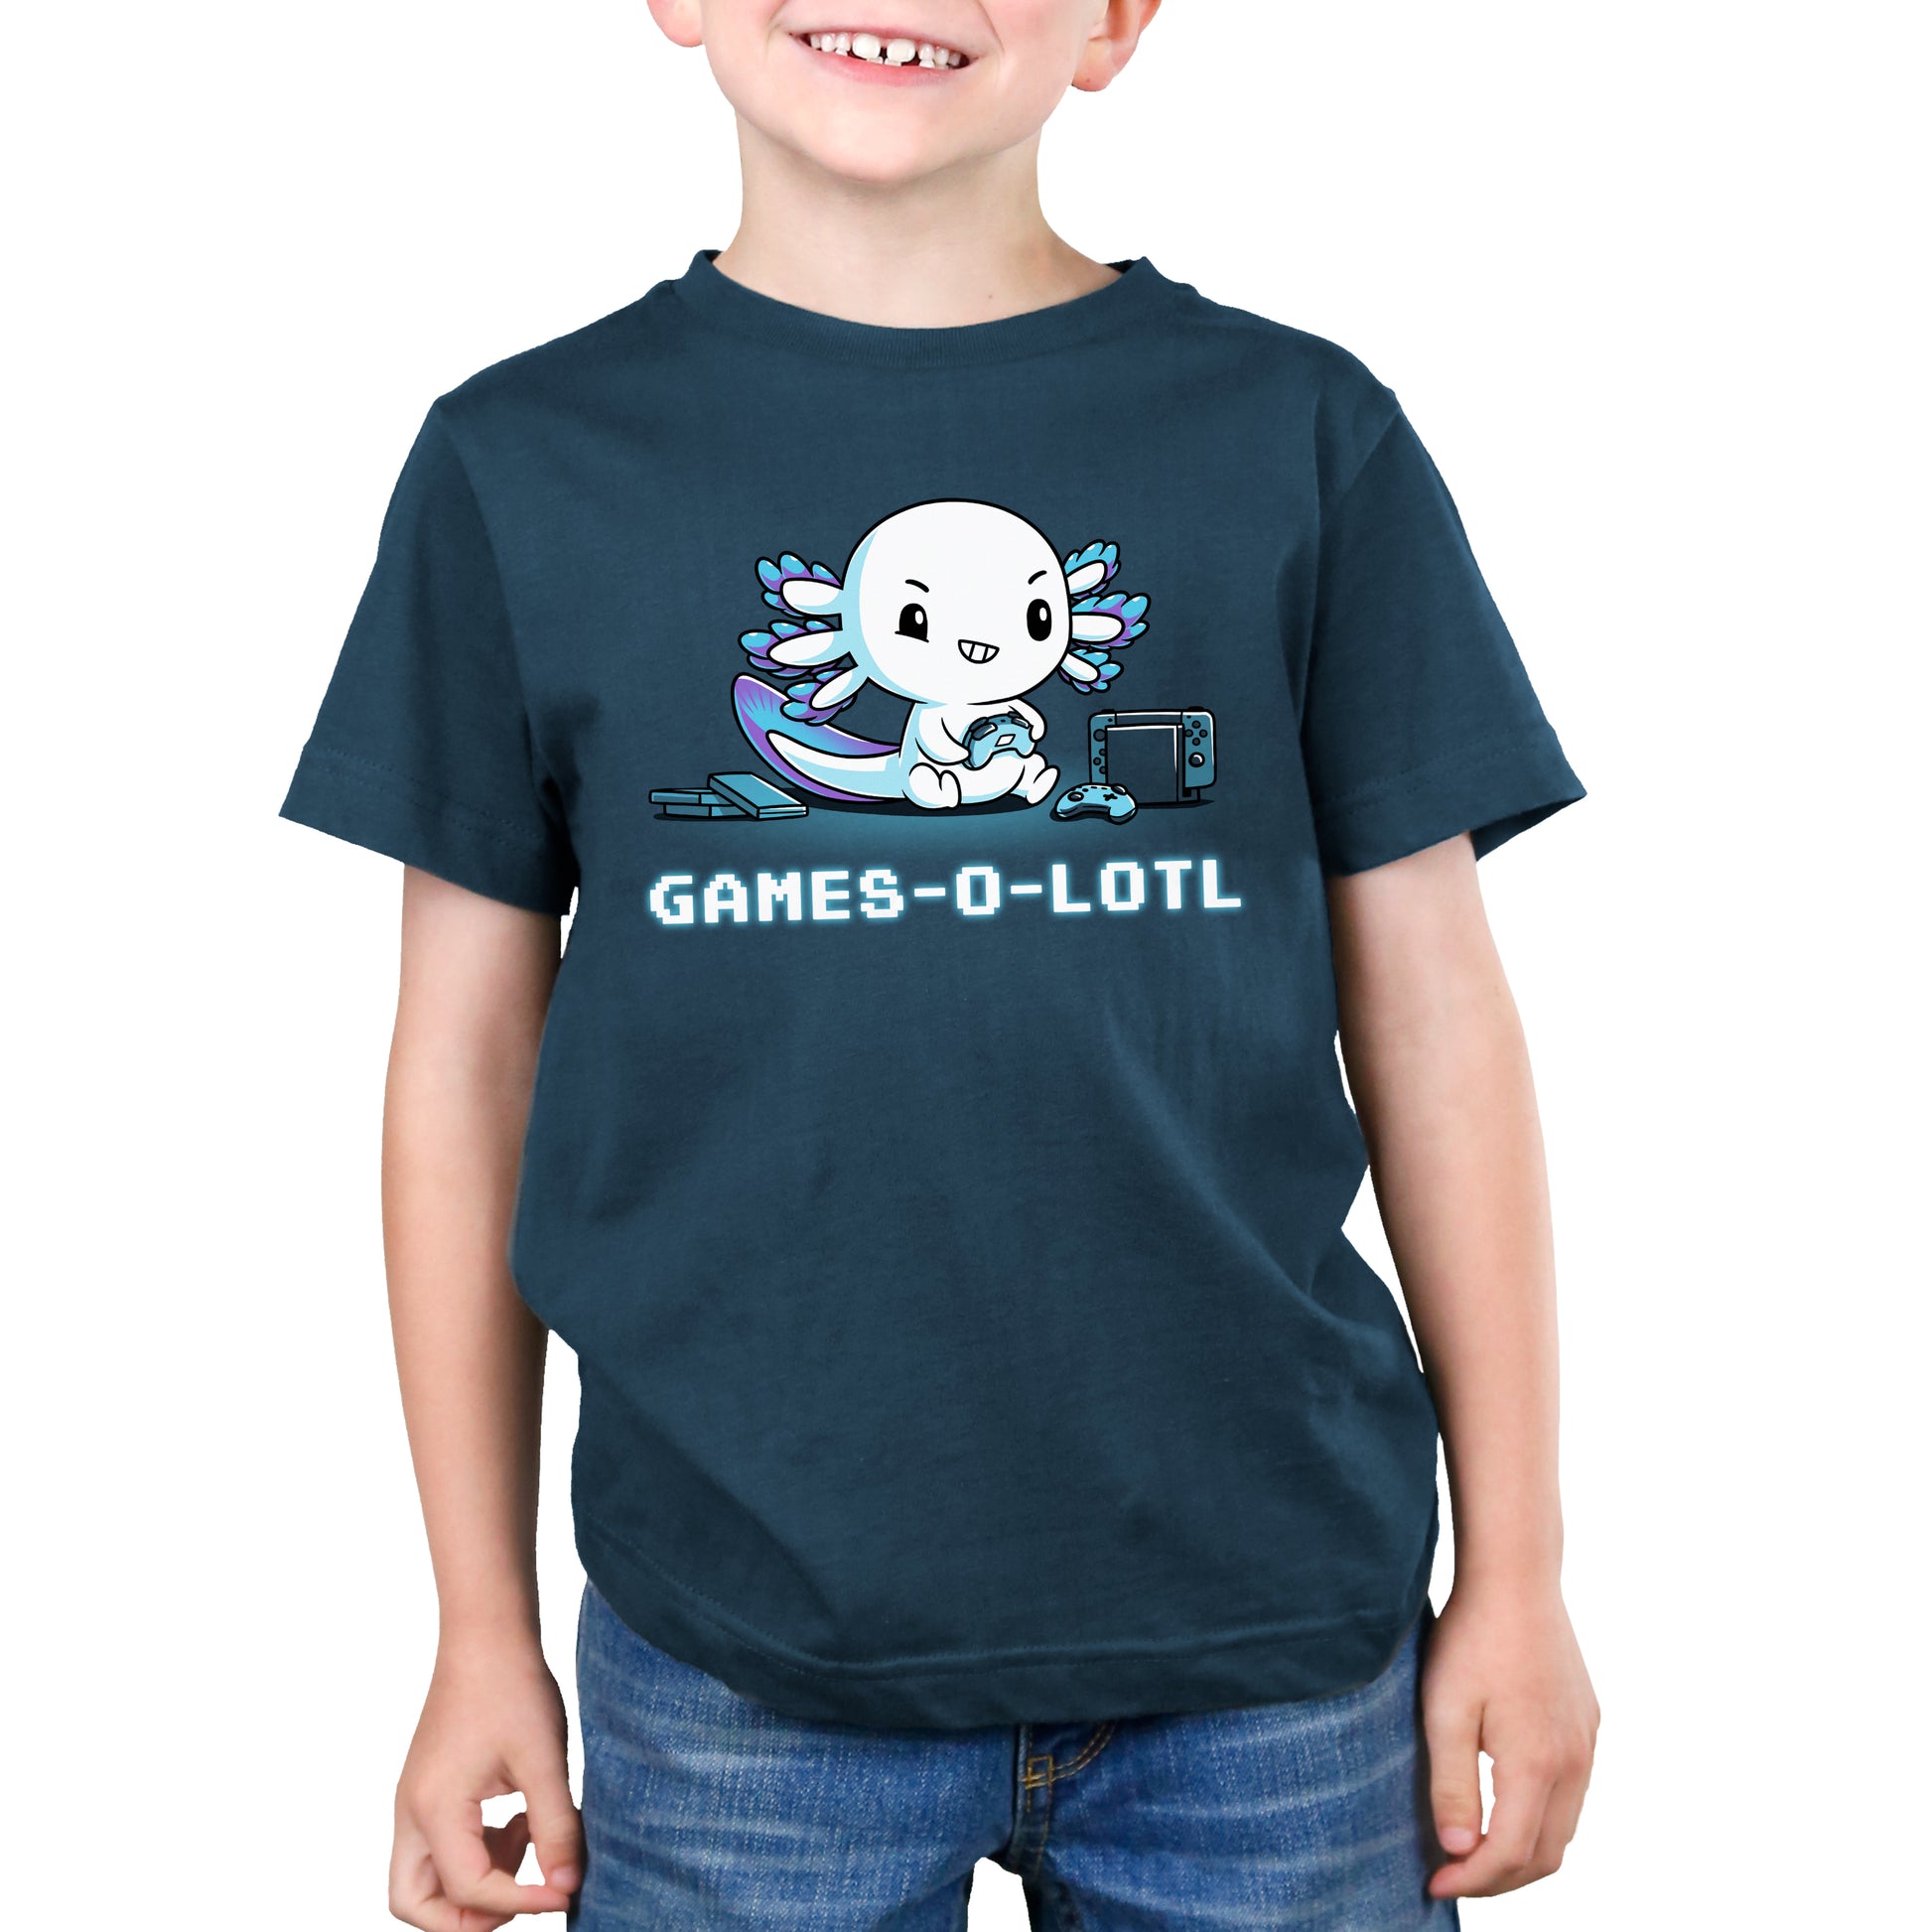 A young boy wearing a denim blue t-shirt from TeeTurtle, showcasing his Games-o-lotl gamer skills.